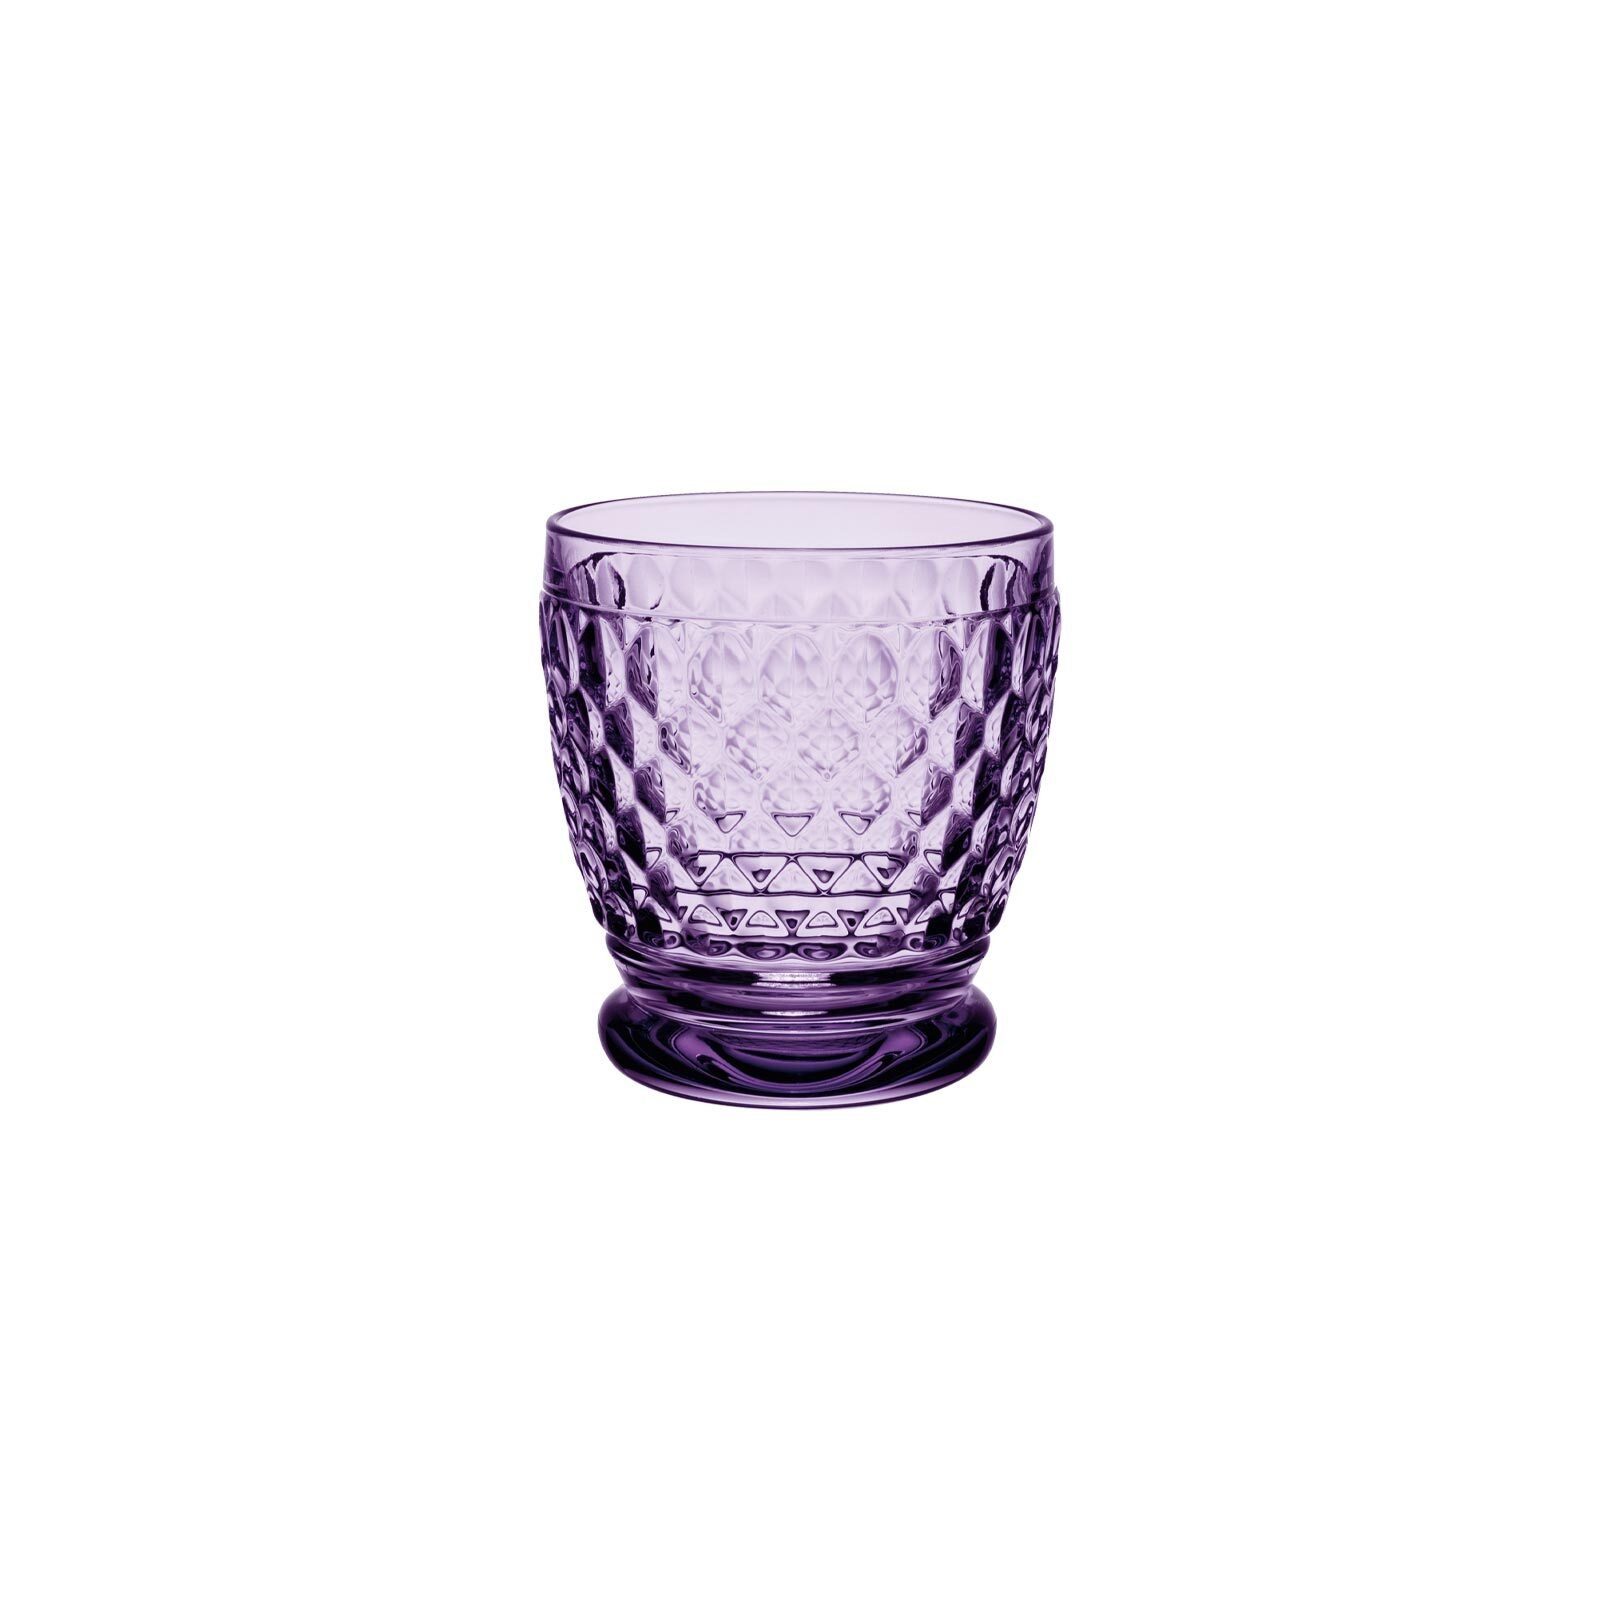 【Neue Version】 Villeroy & Boch Whiskyglas Boston 330 ml, Becher Glas Lavender Coloured